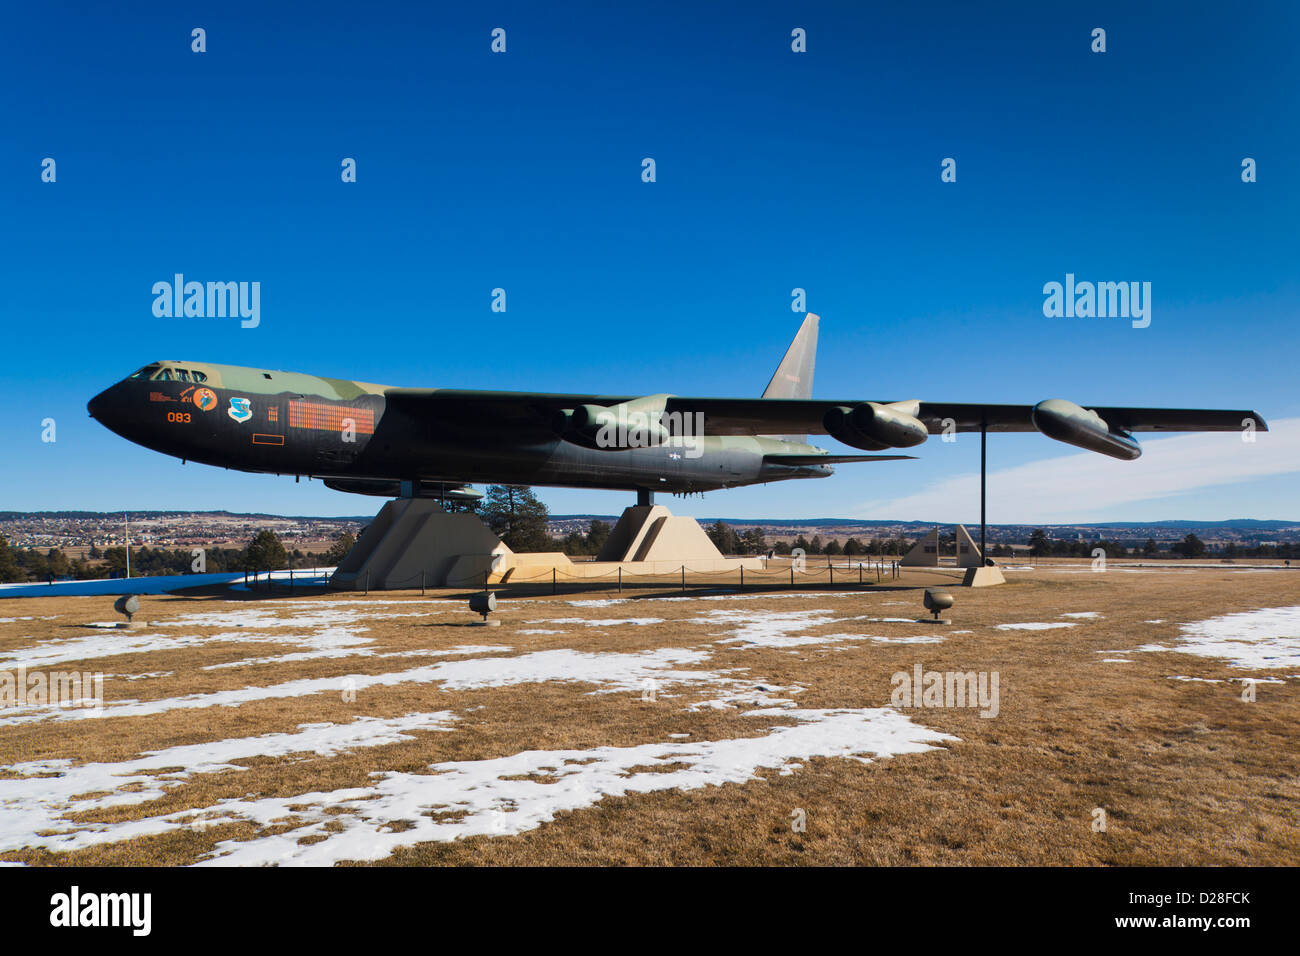 USA, Colorado, Colorado Springs, United States Air Force Academy, Vietnam War B-52 bomber display Stock Photo